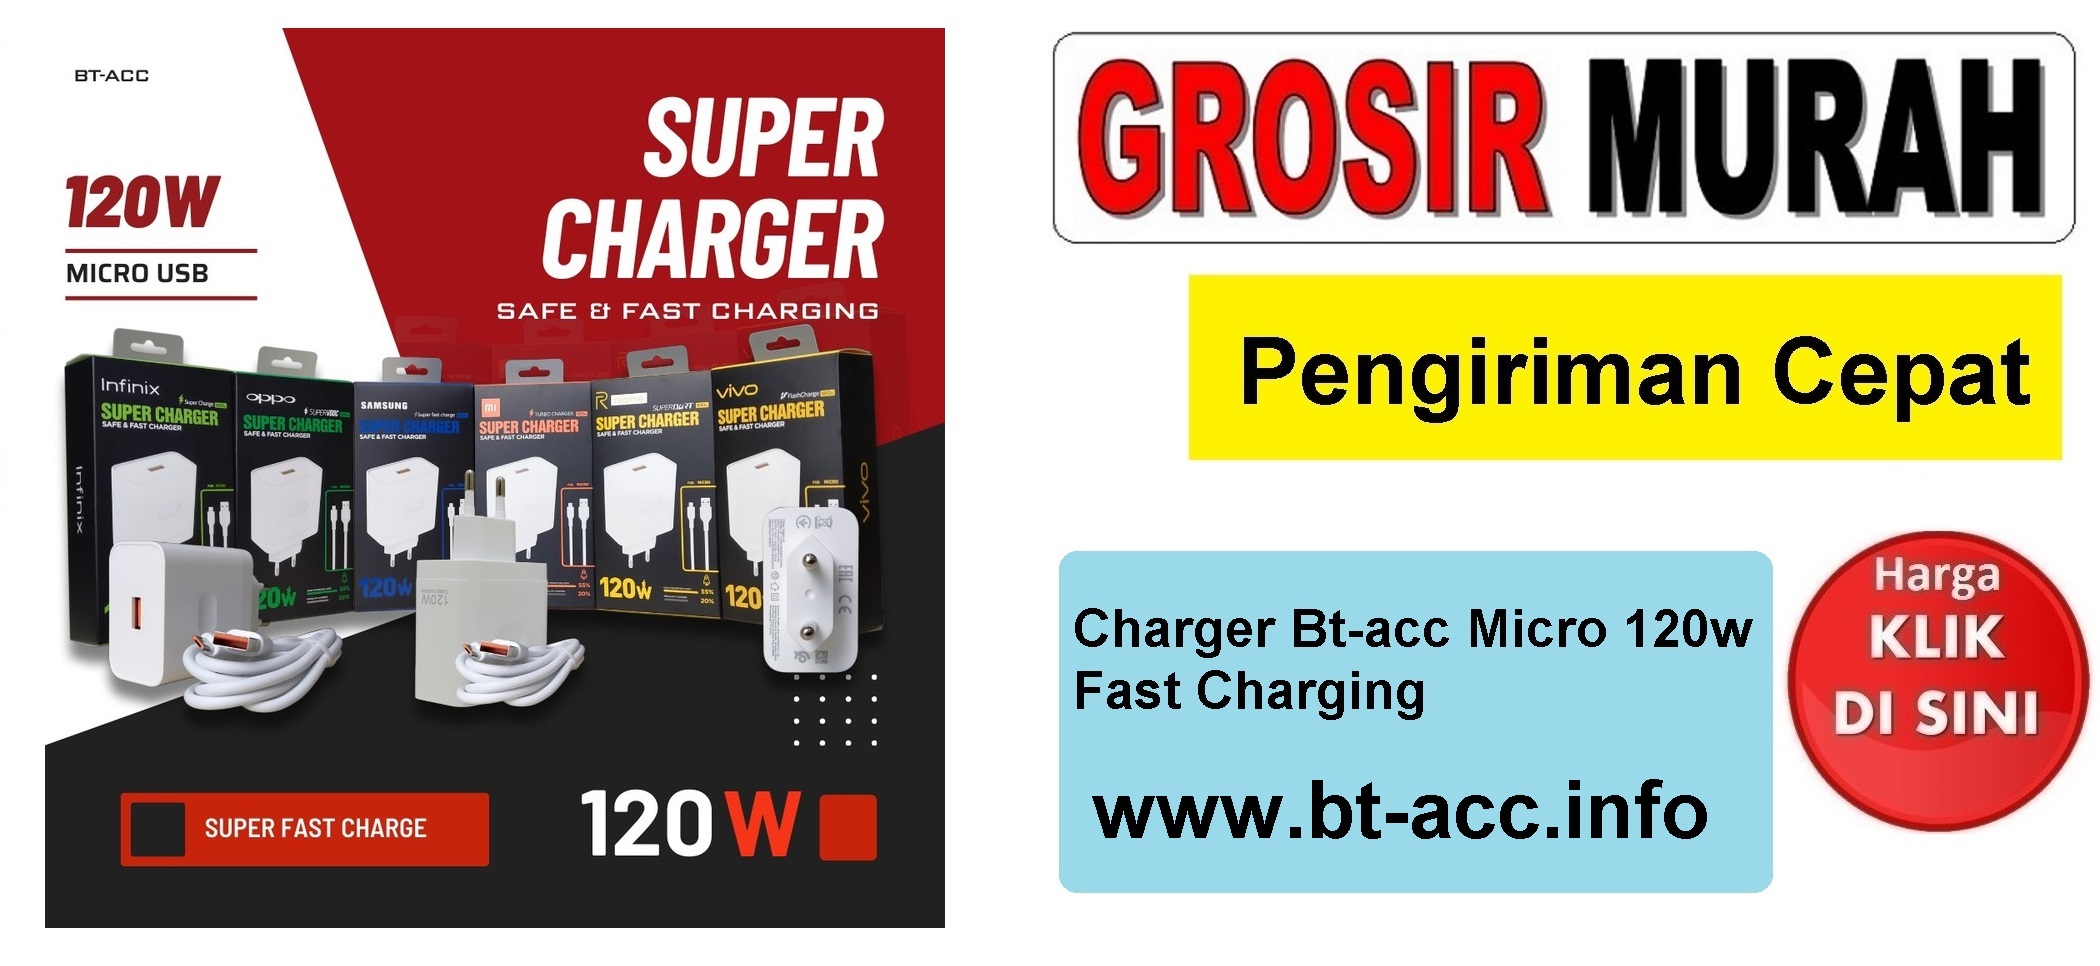 Charger Bt-acc Micro 120w Fast Charging casan tc usb cas Spare Part Hp Grosir